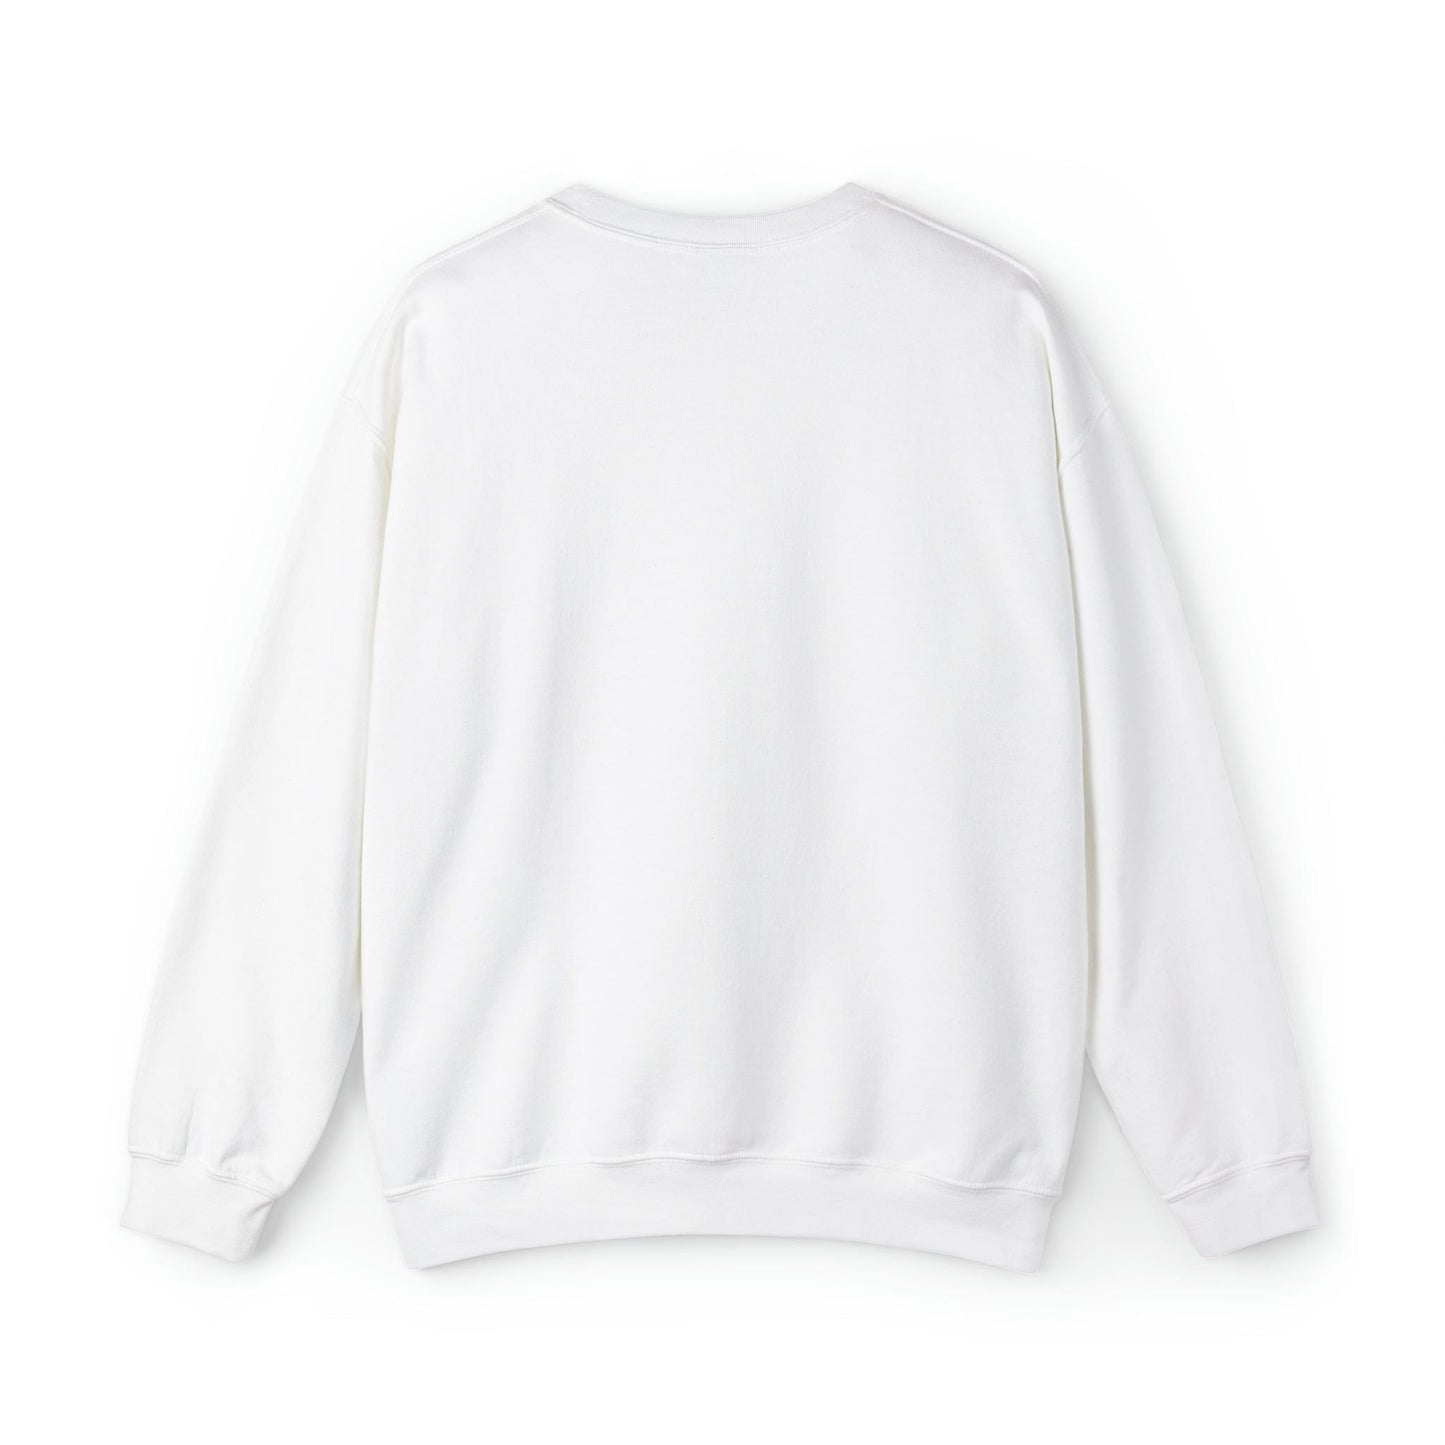 Nanasauras Unisex Heavy Blend™ Crewneck Sweatshirt